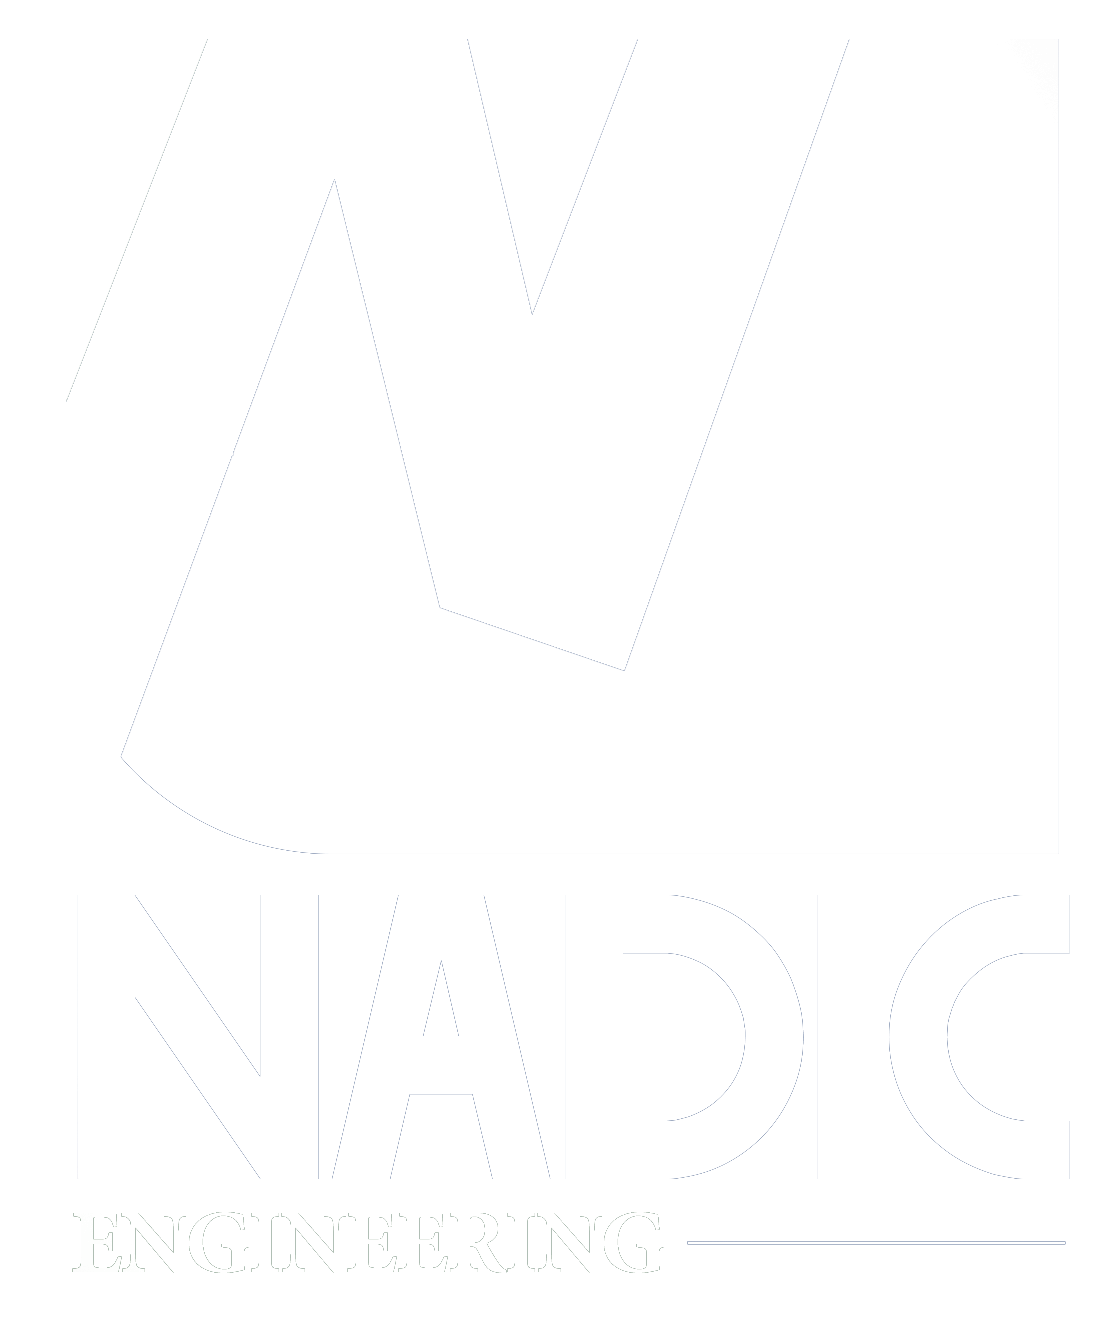 Nadic Engineering Services Inc